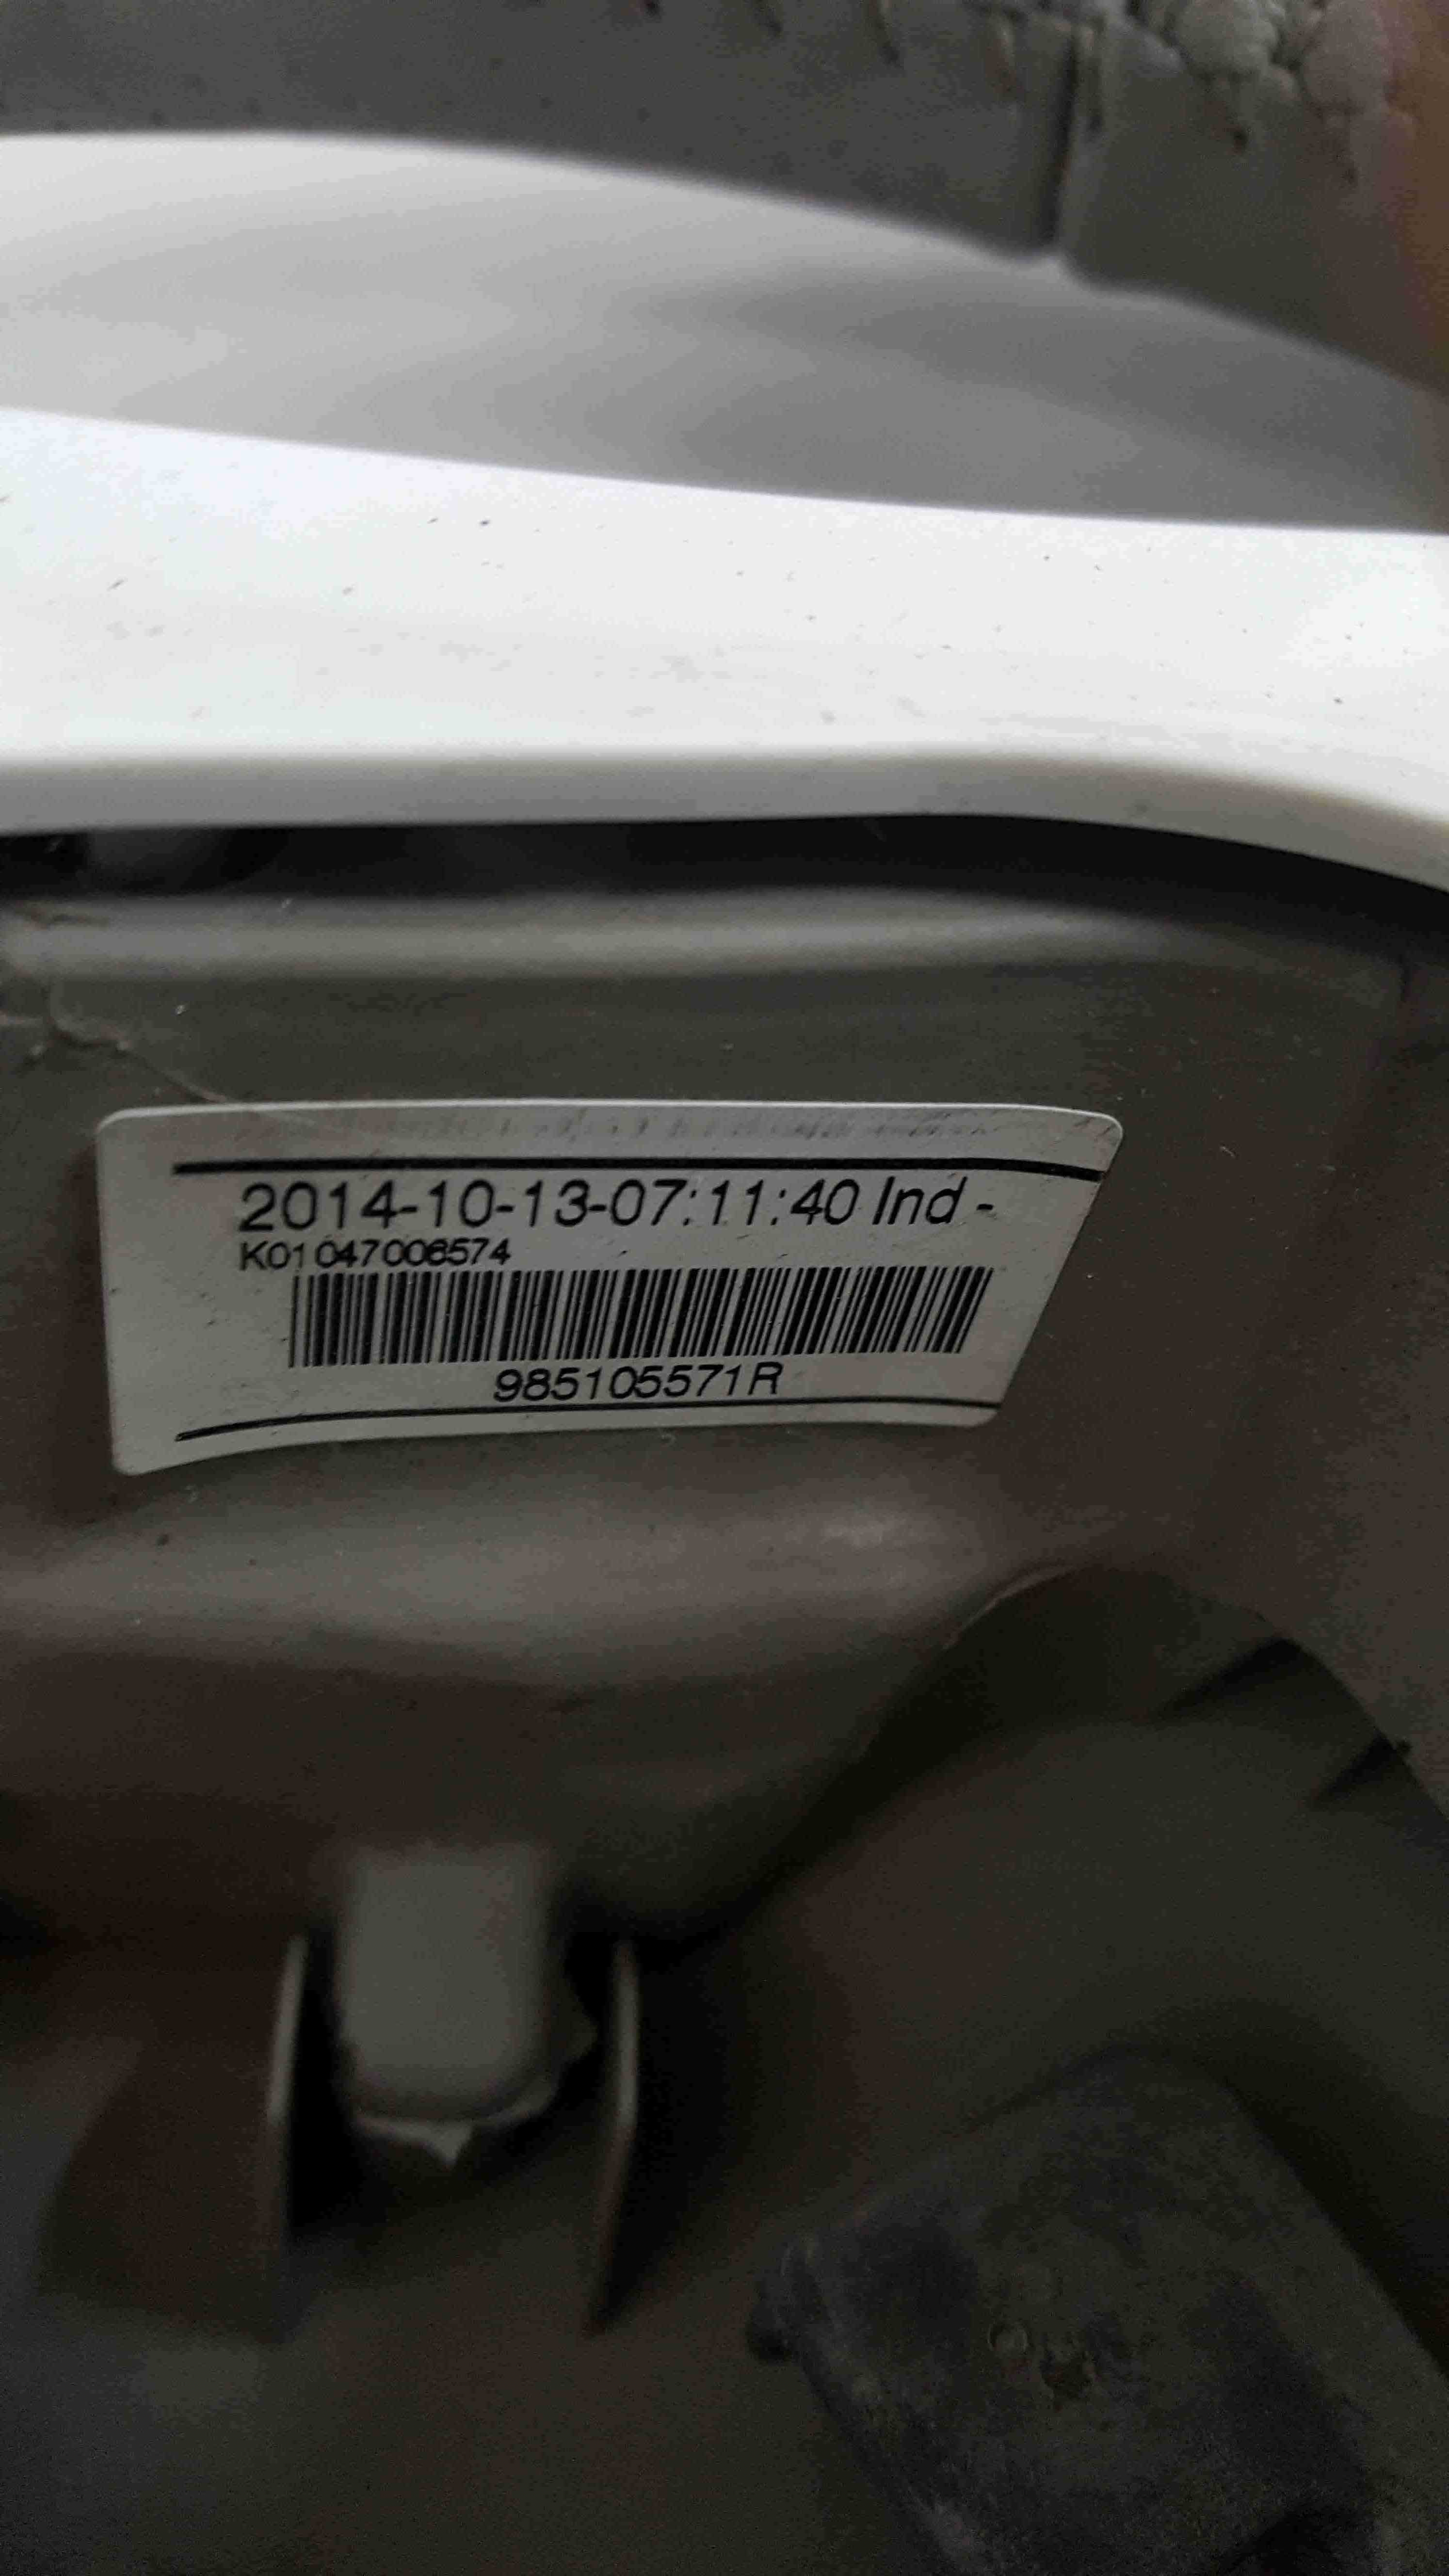 Renault Zoe 2012-2018 Steering Wheel Cruise Control Beige White Insert